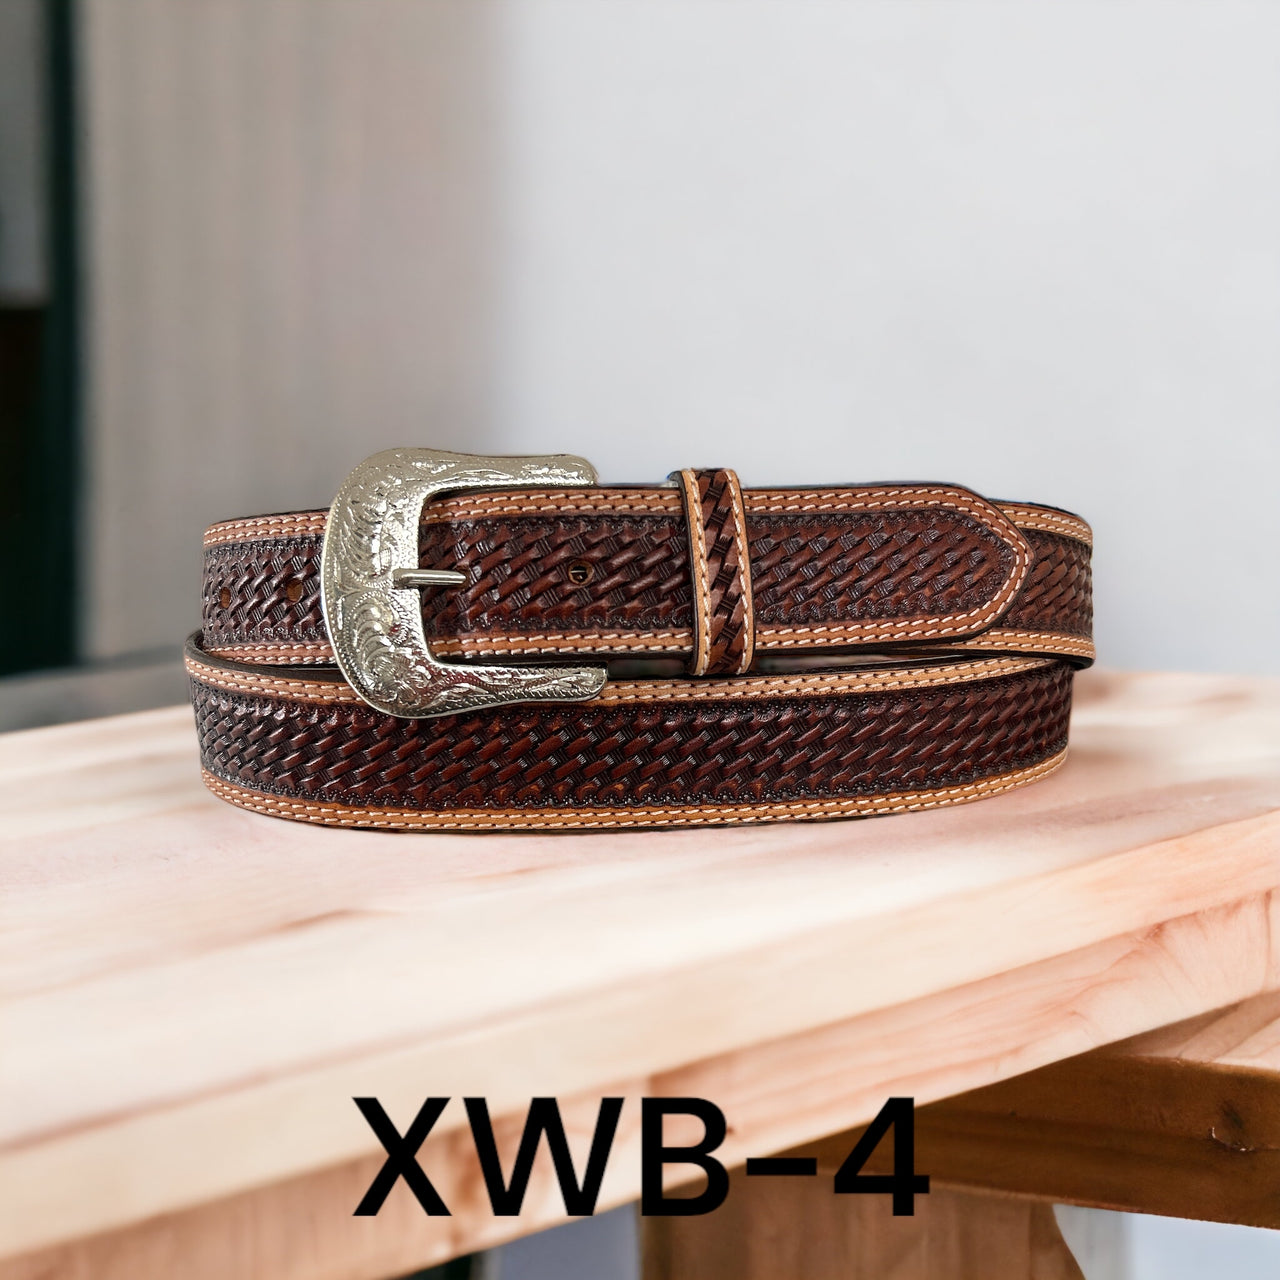 Twisted X Men's Leather Basketweave Belt - Chocolate/Tan